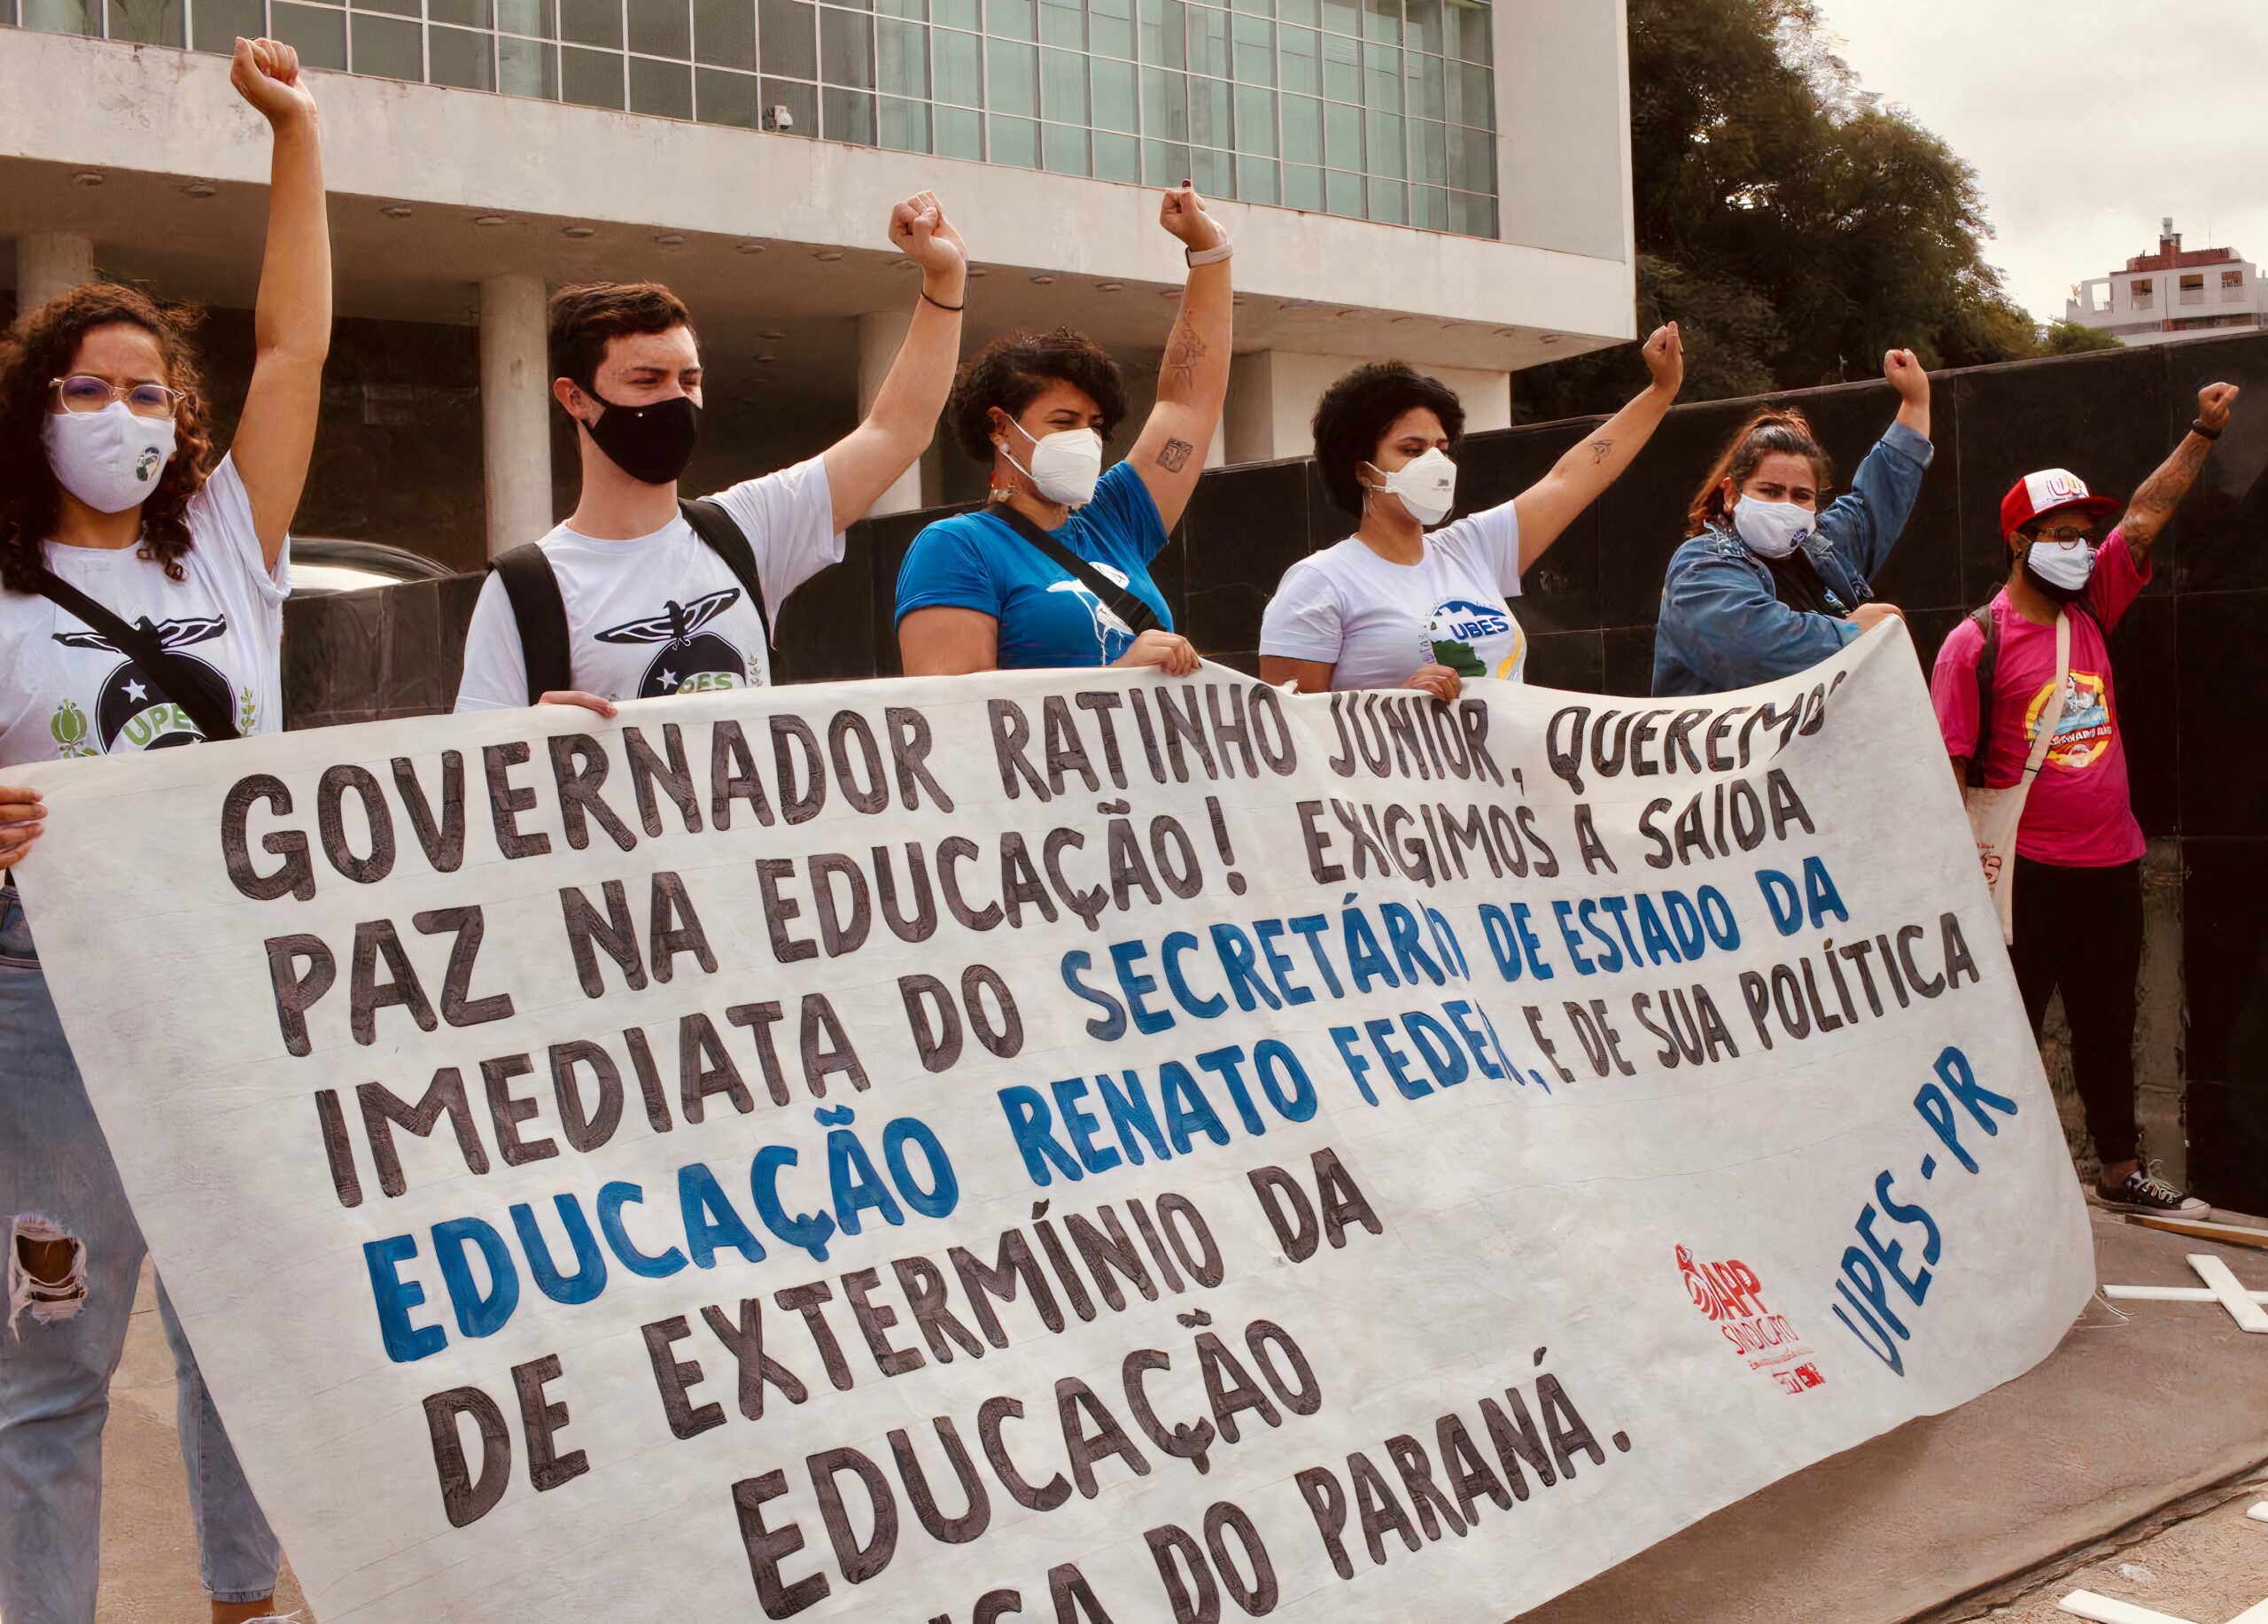 Movimento estudantil enfraquece no Paraná durante pandemia